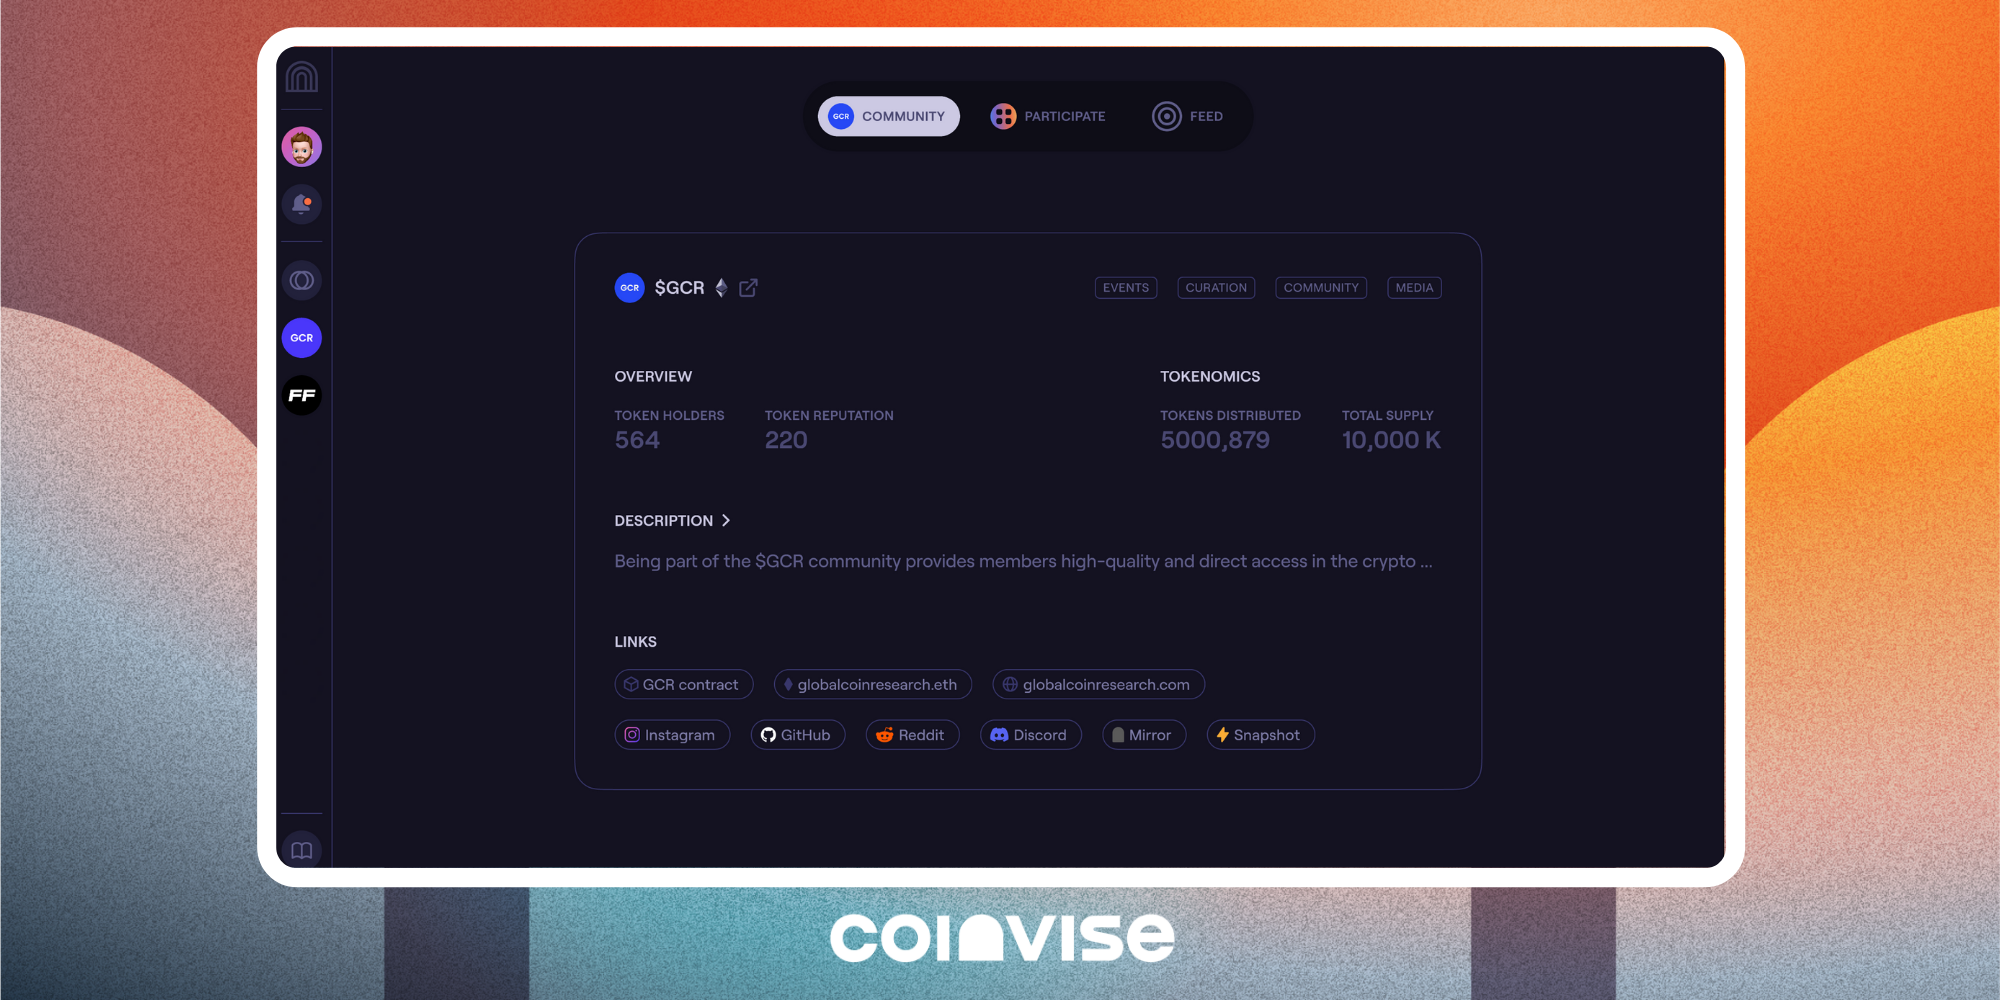 Coinvise's Profile - Community Tab